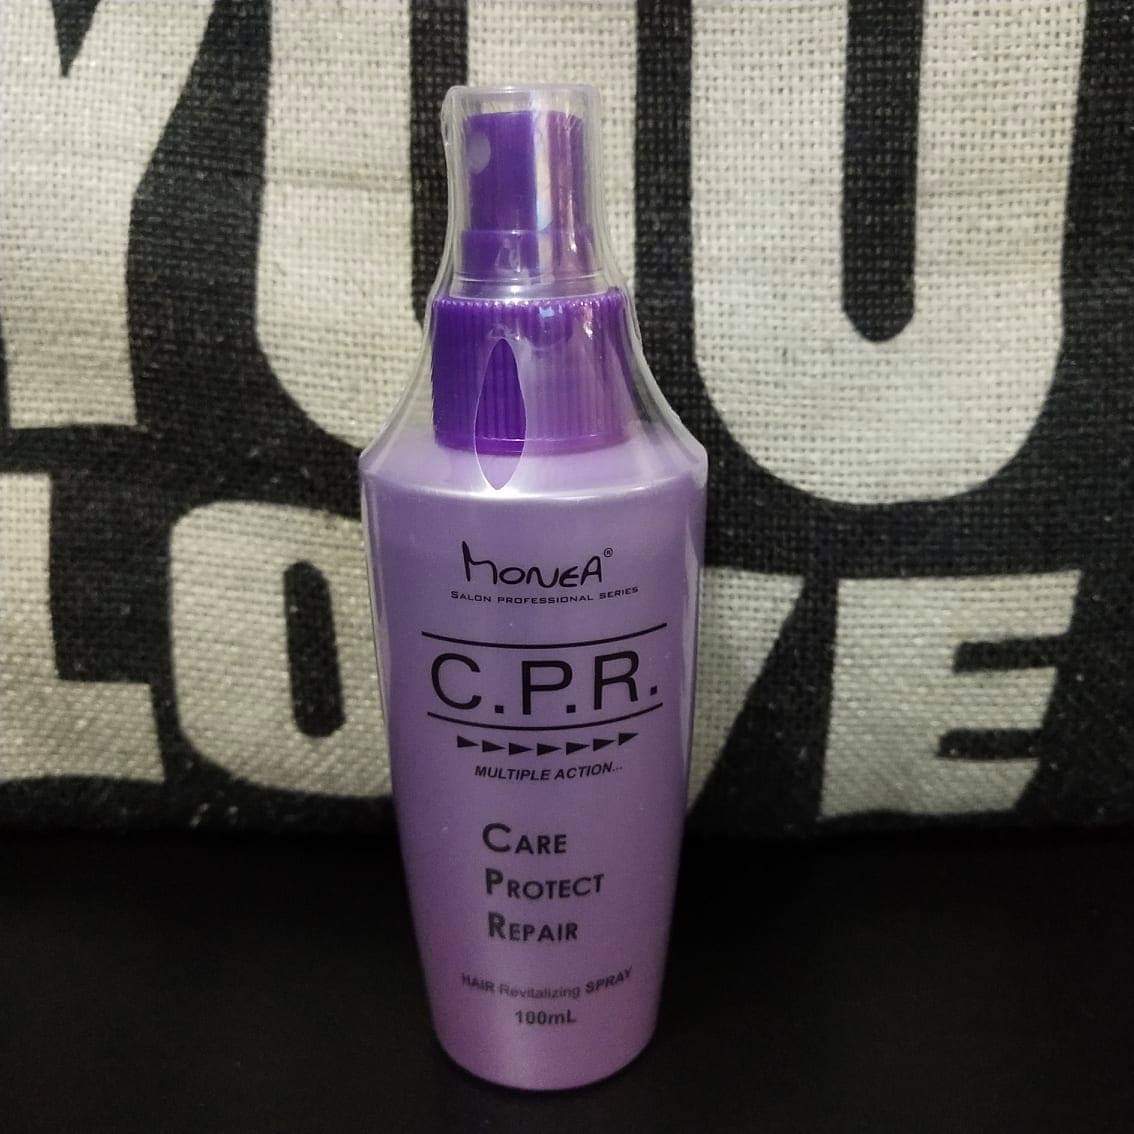 Monea CPR - Care, Protect, Repair Hair Revitalizing Spray (100ml)